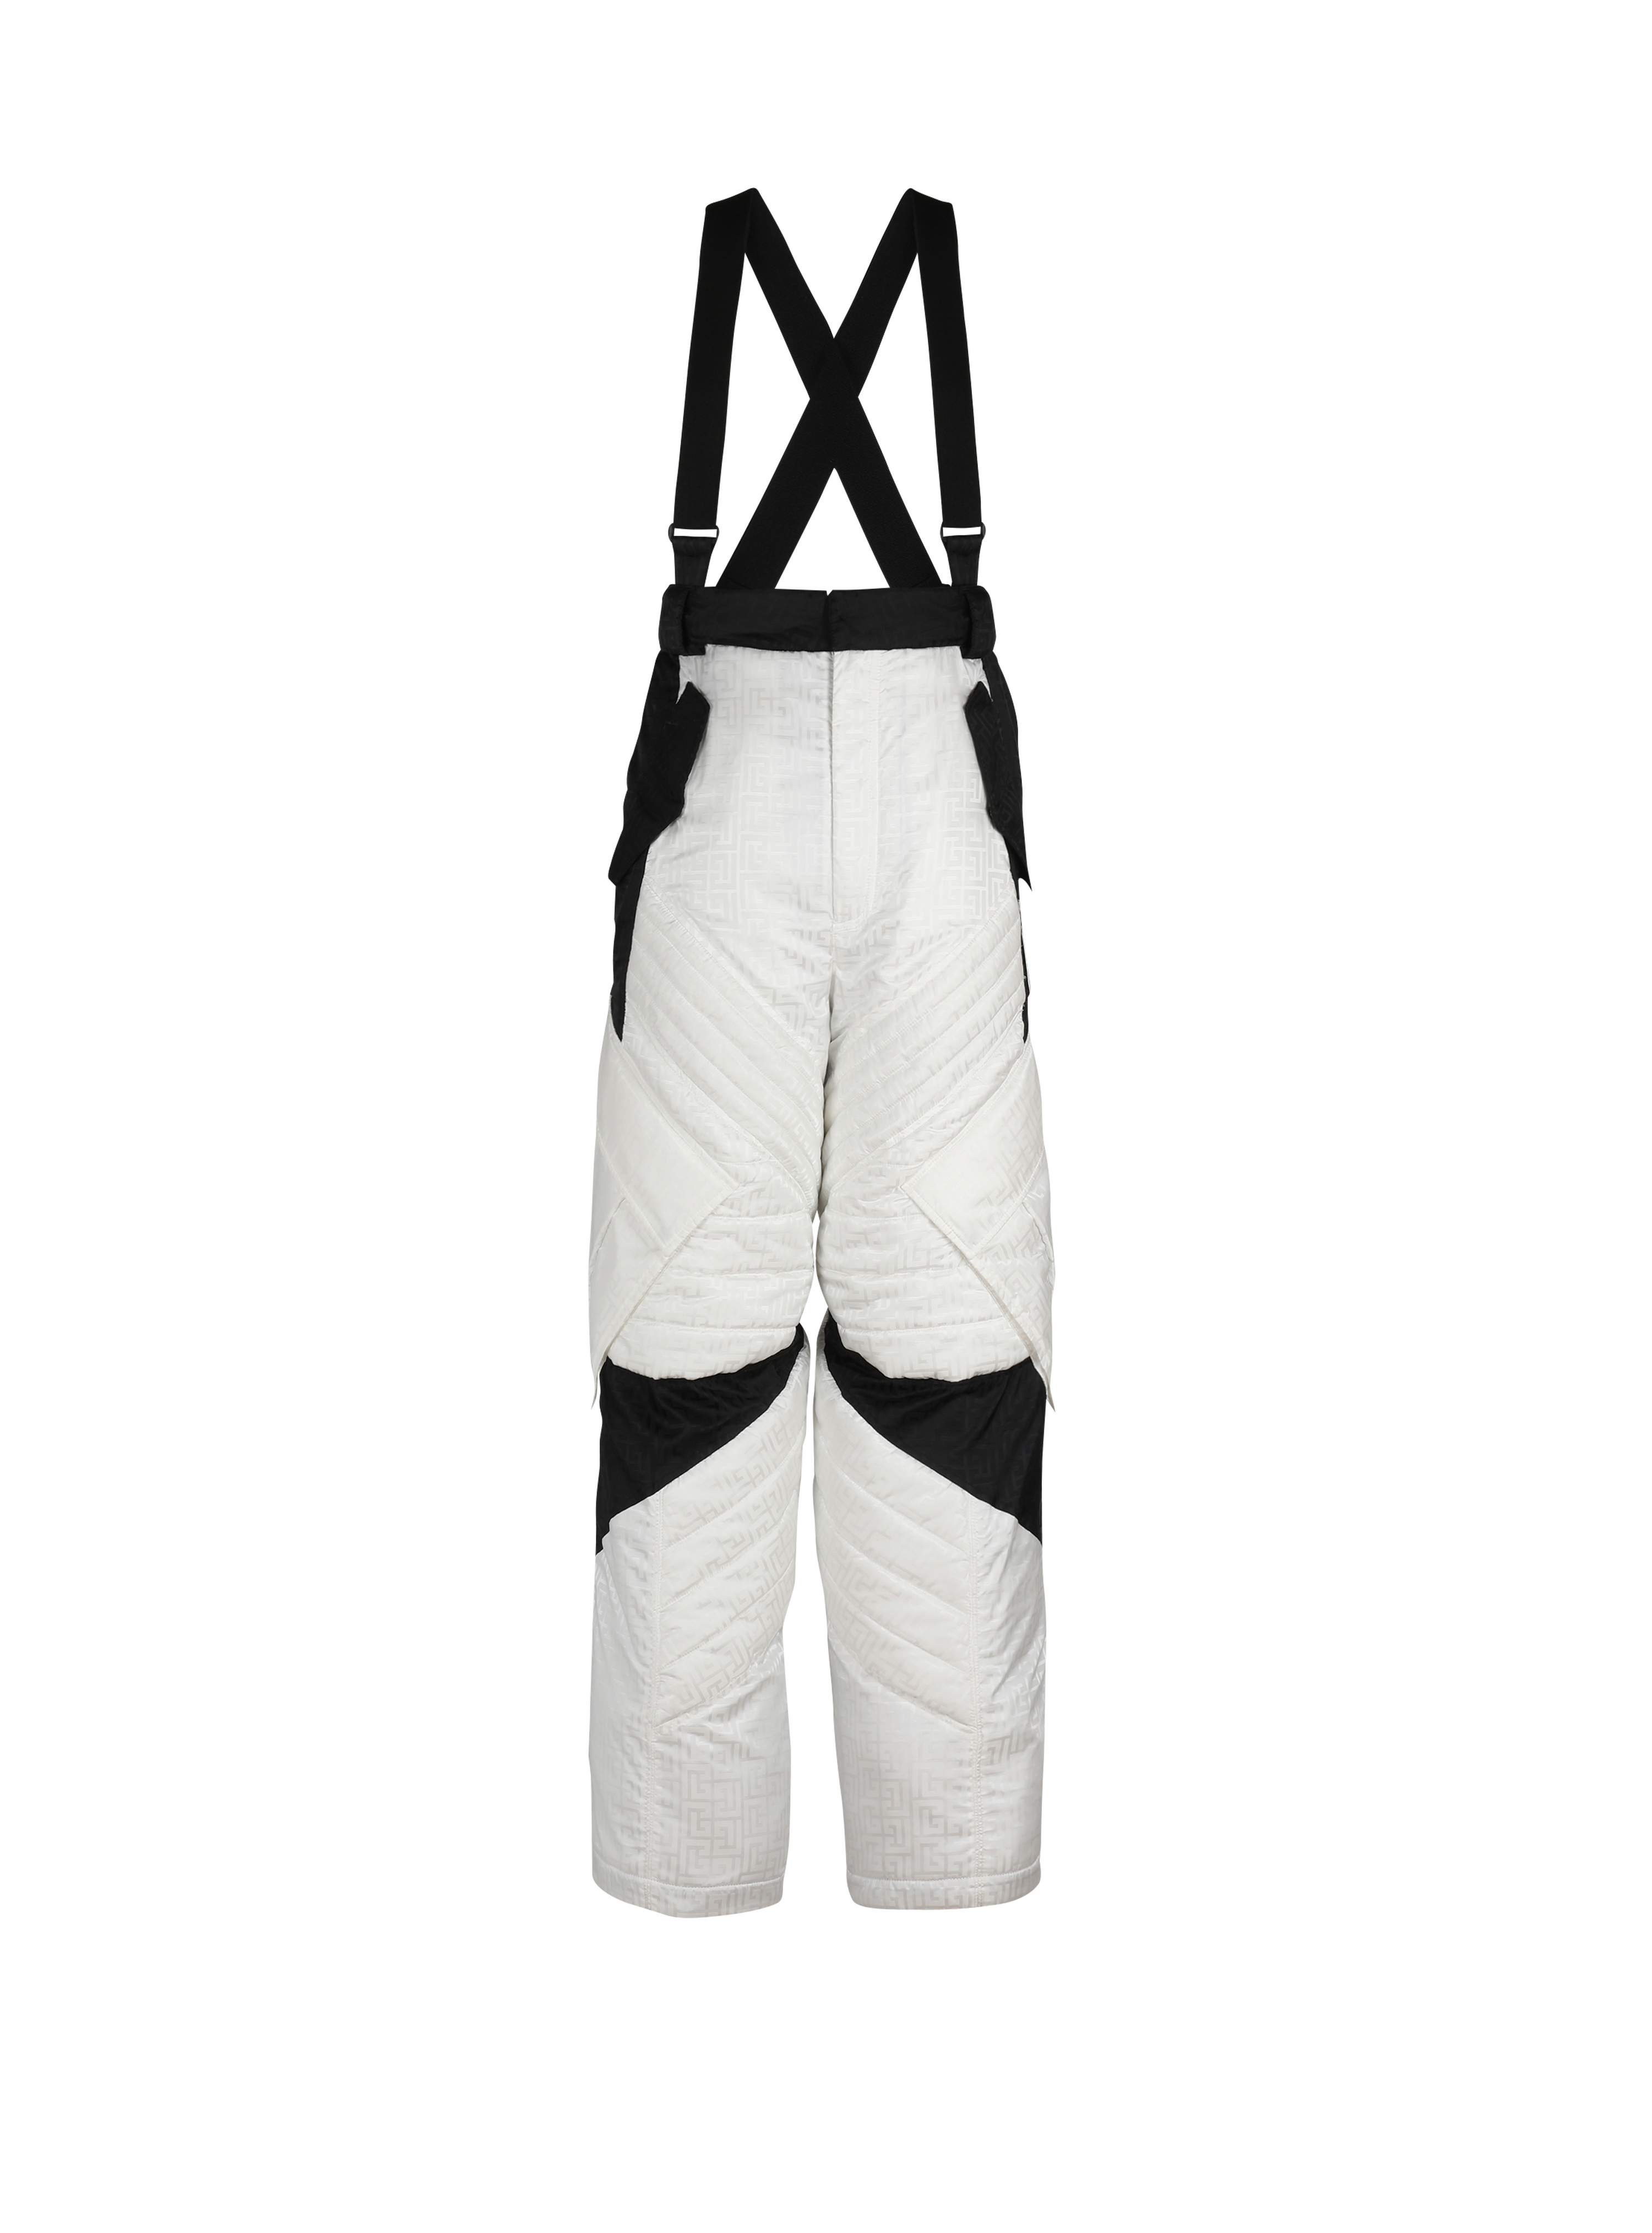 Balmain x Rossignol联名 - Balmain字母标识背带式滑雪裤, white